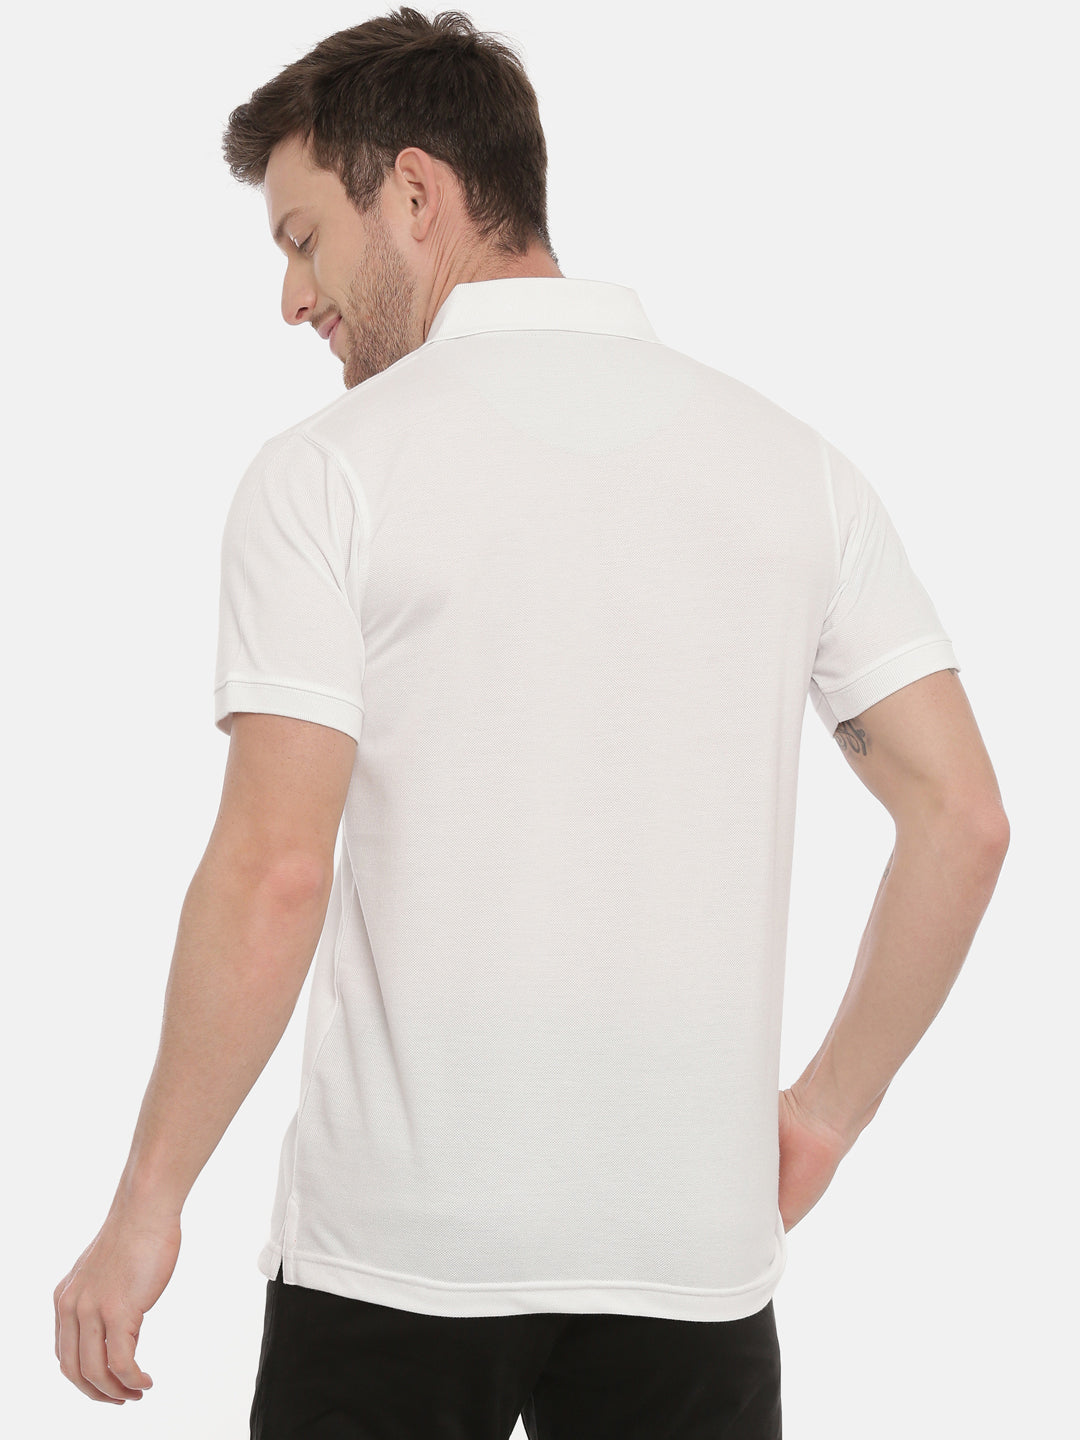 White Polo Neck T Shirt Polo Tees Bushirt   